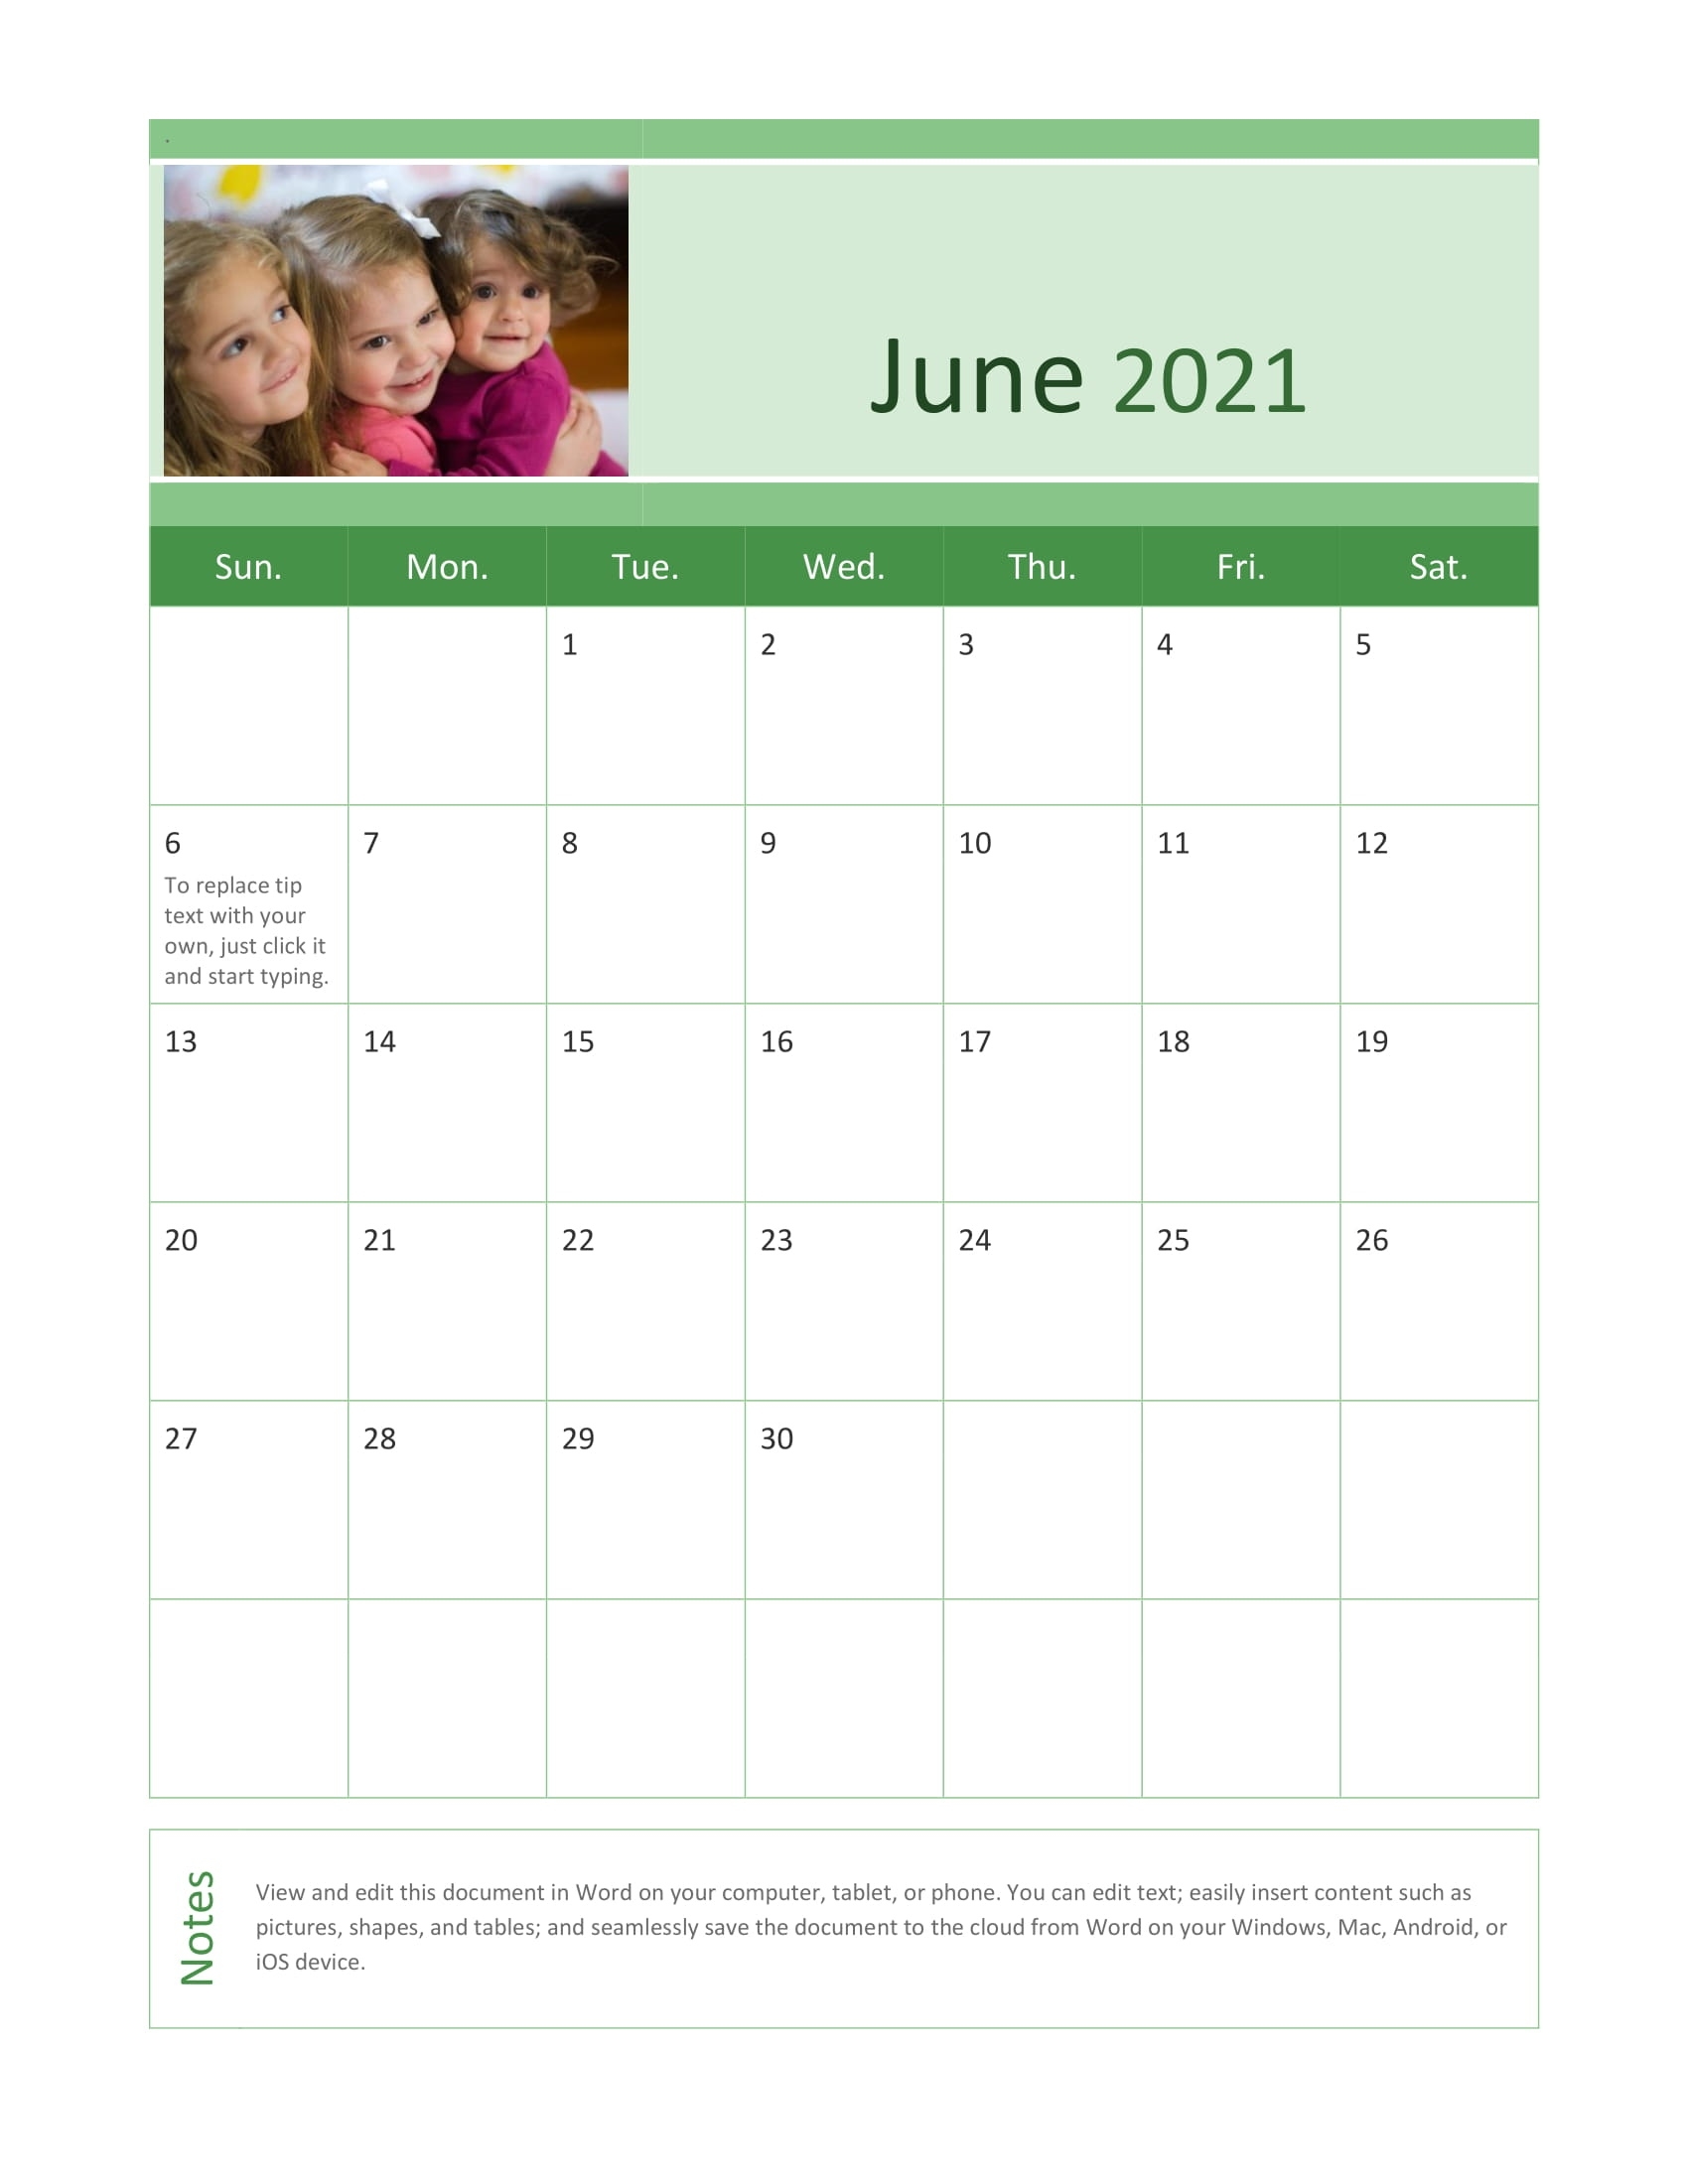 June 2021 Calendar Printable - Printable Calendar Template 2020 2021 June 2021 Daily Calendar